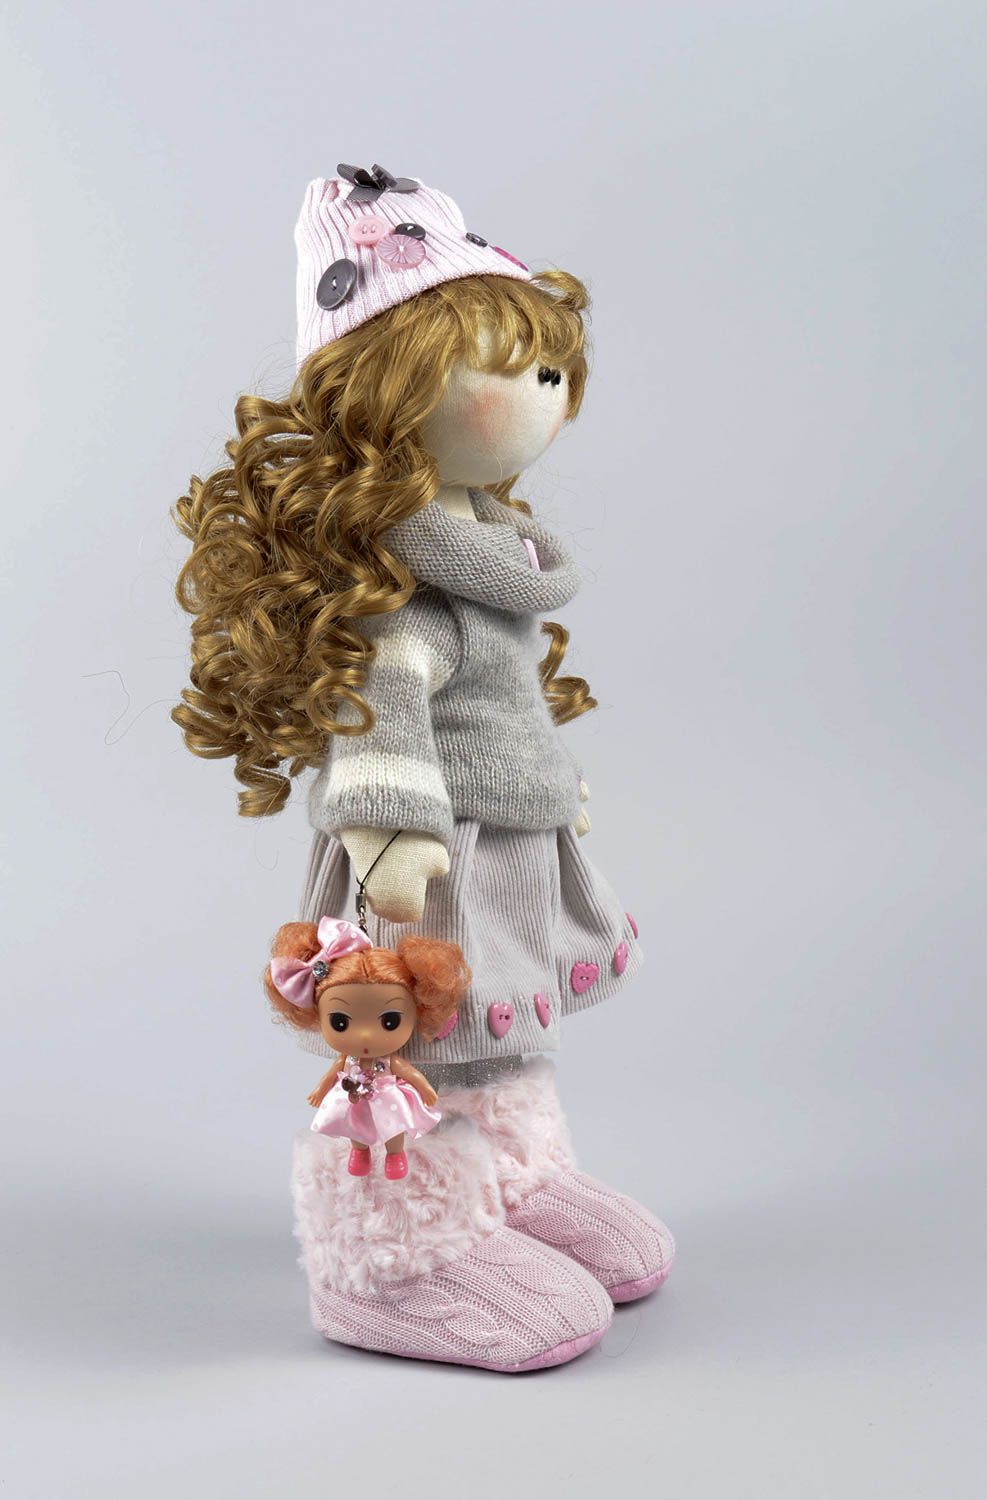 Unusual handmade soft toy for kids rag doll for girls birthday gift ideas photo 2